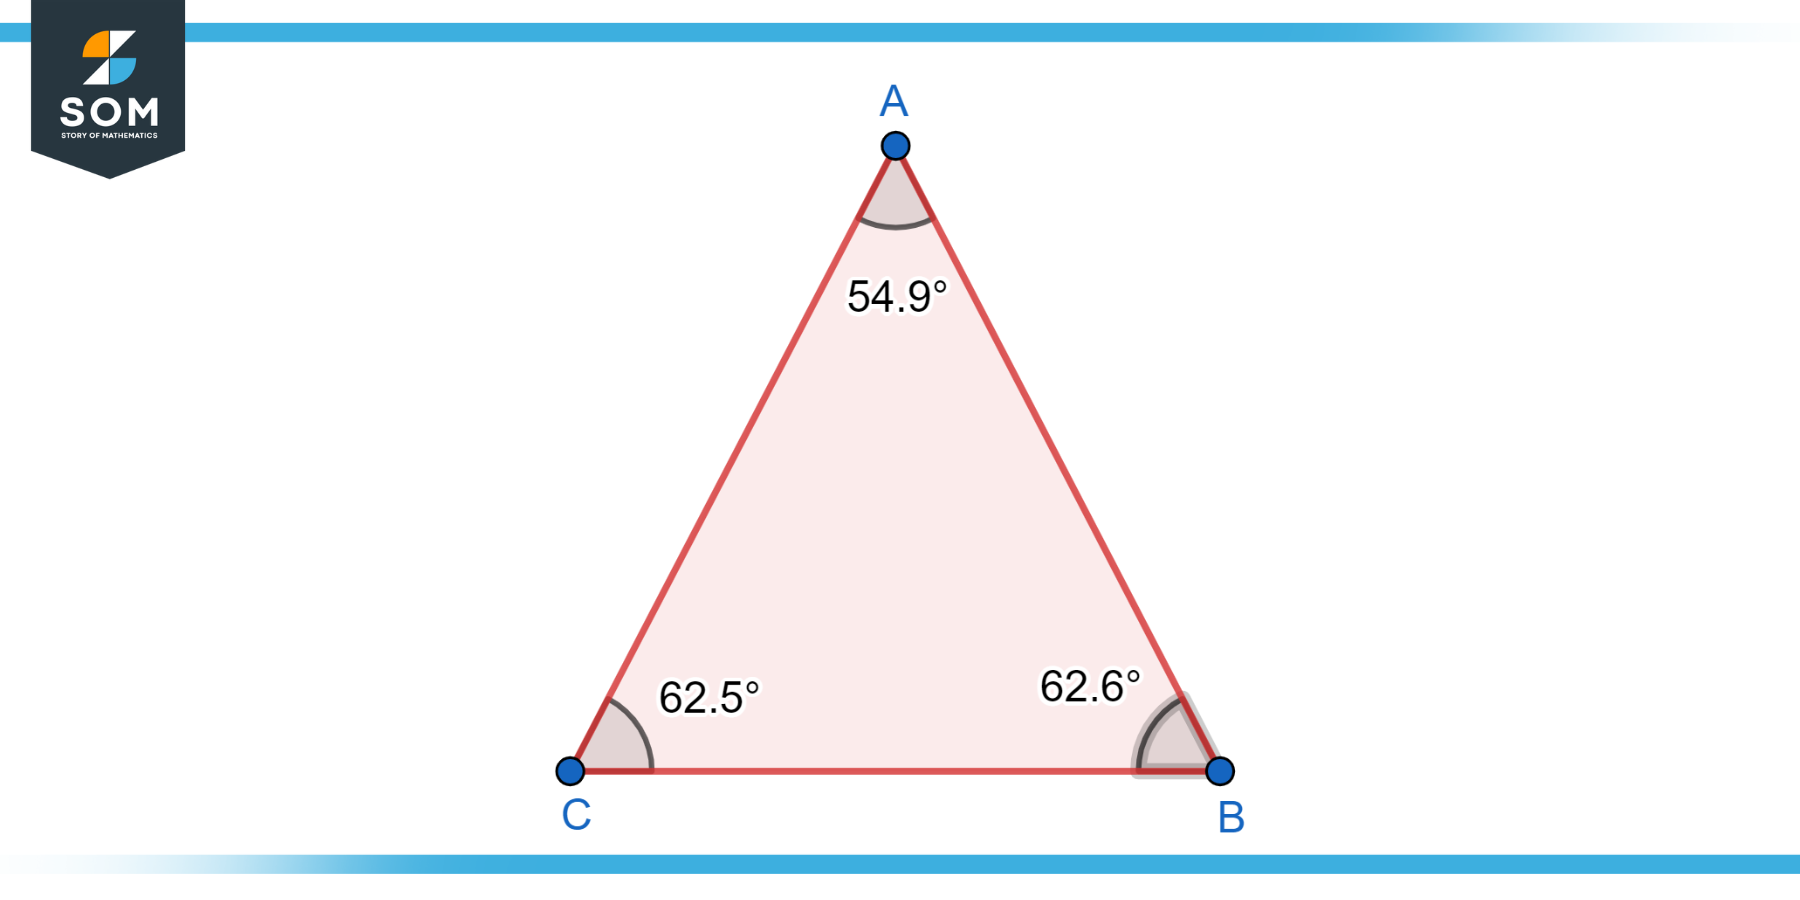 Right Triangle ABC Acute